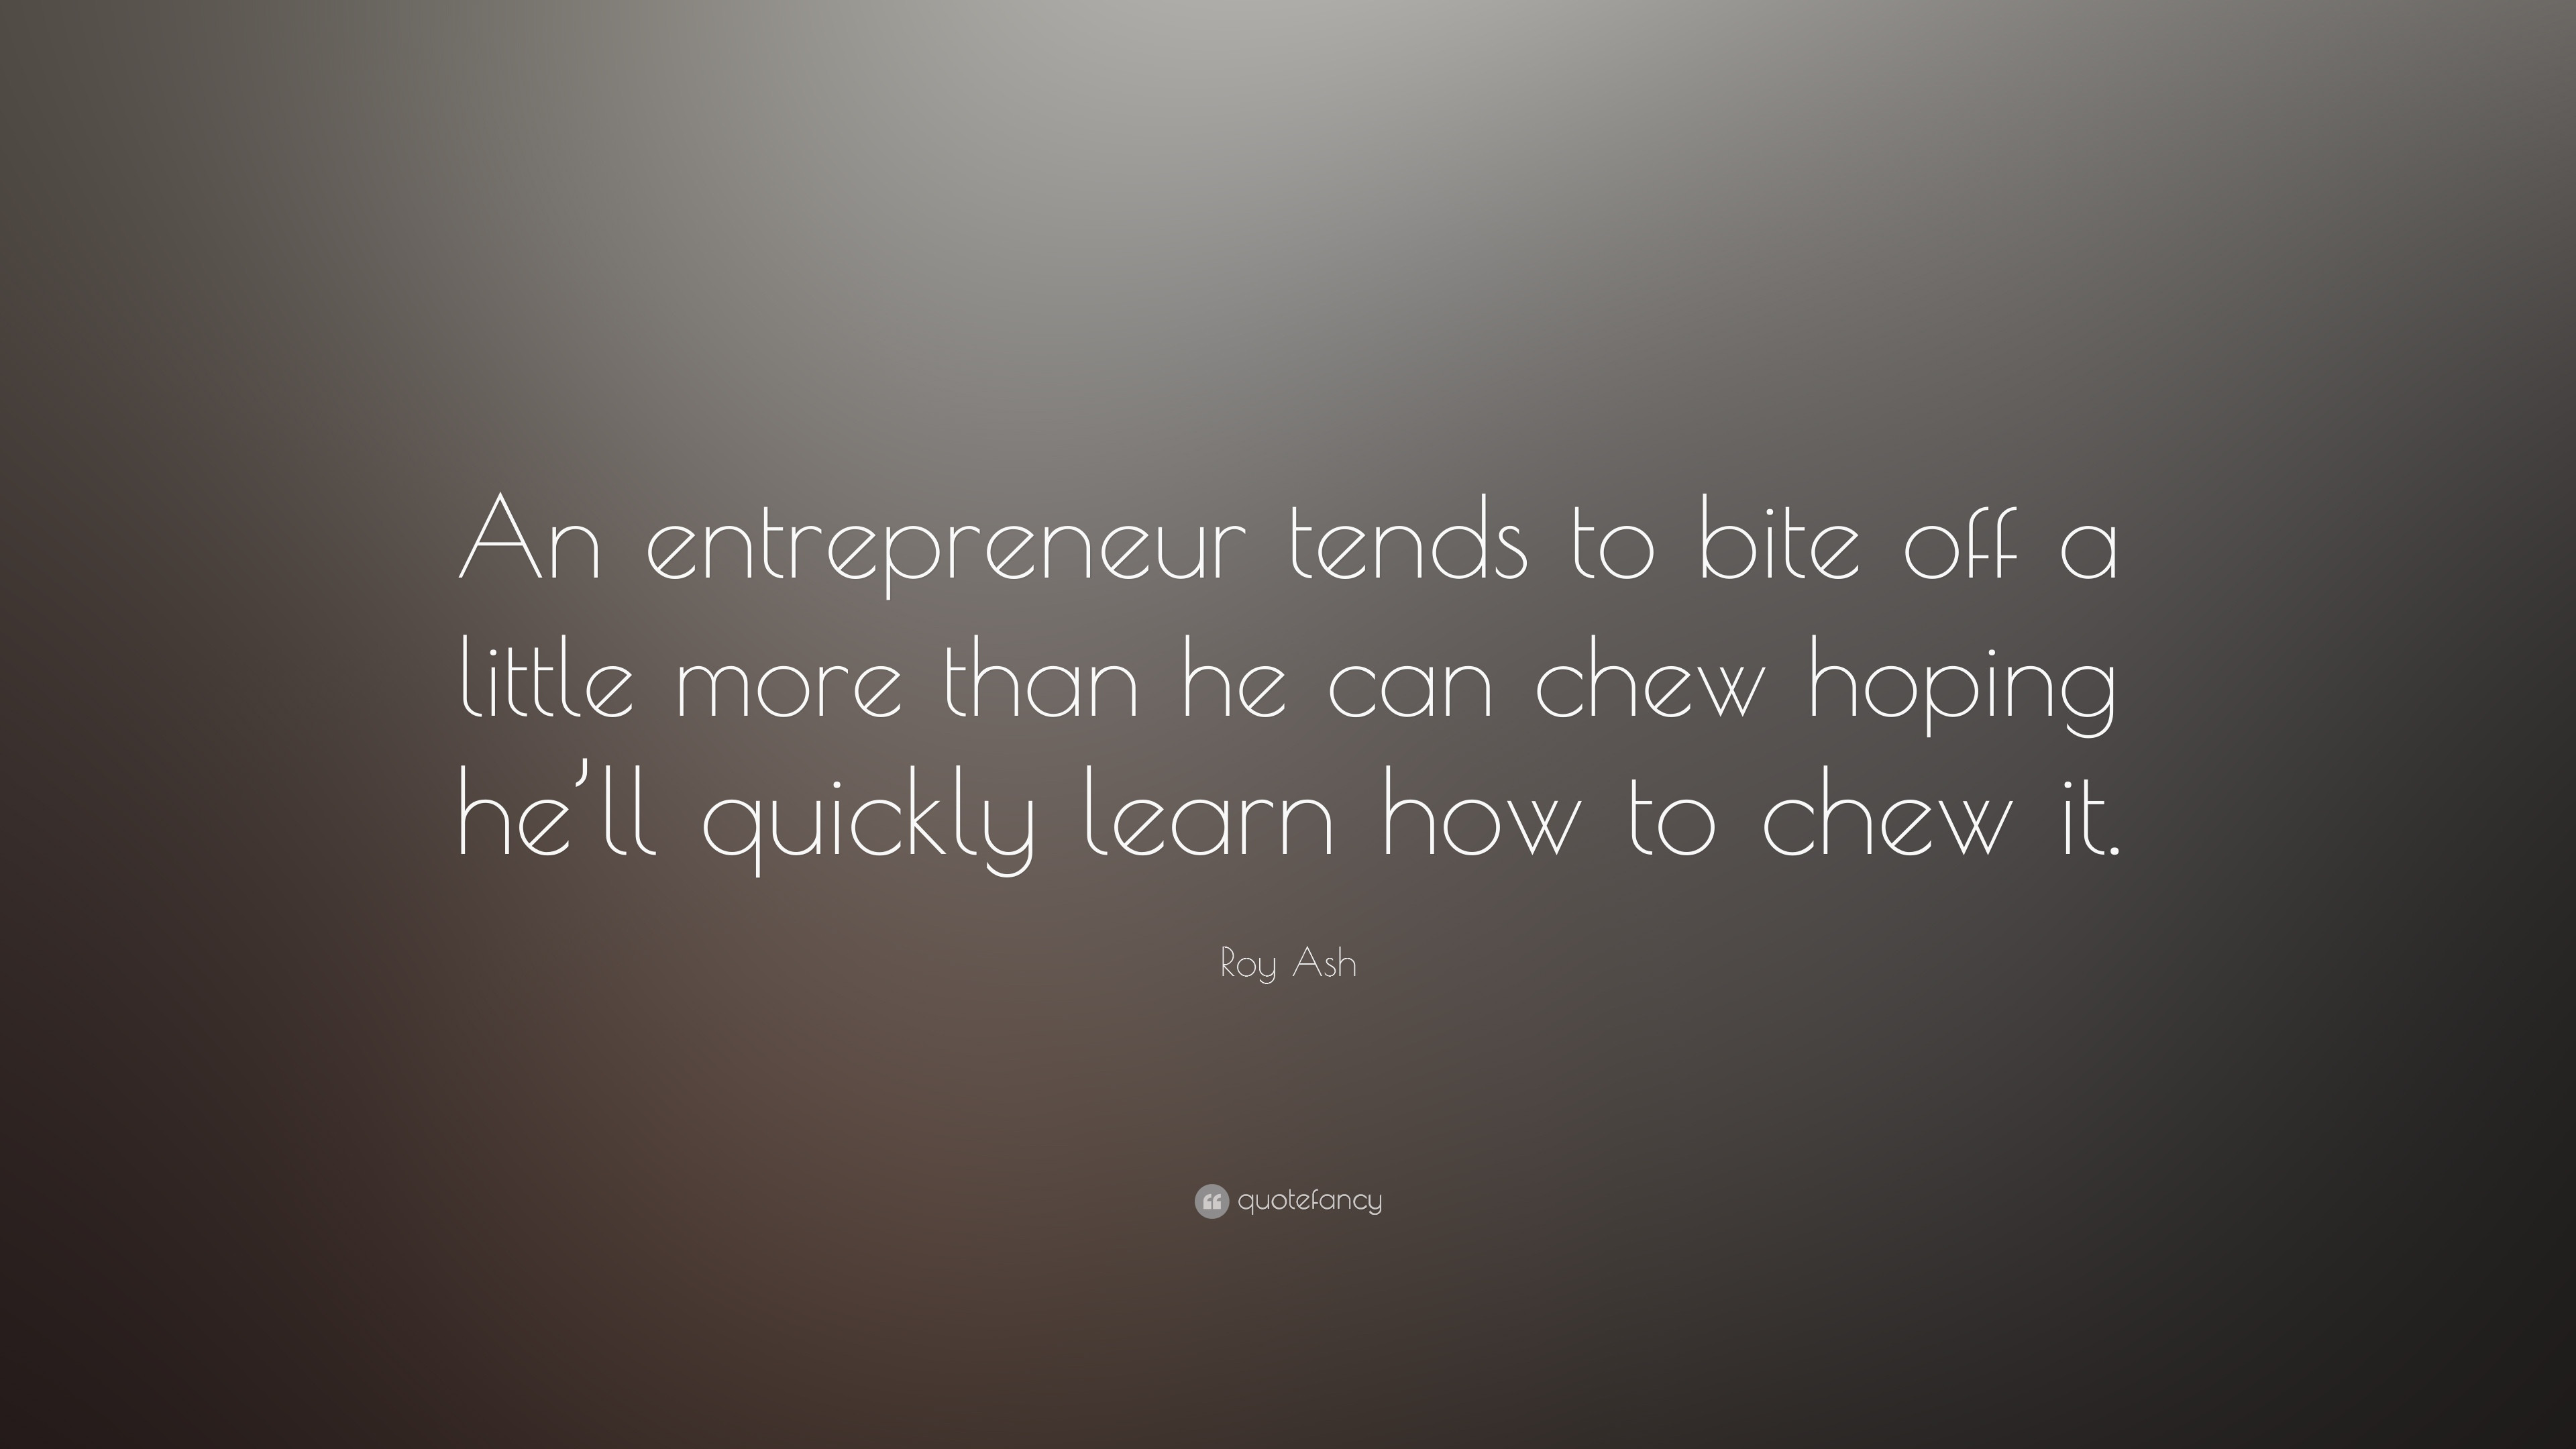 Entrepreneurship Motivational Quotes
 Inspirational Entrepreneurship Quotes 100 wallpapers